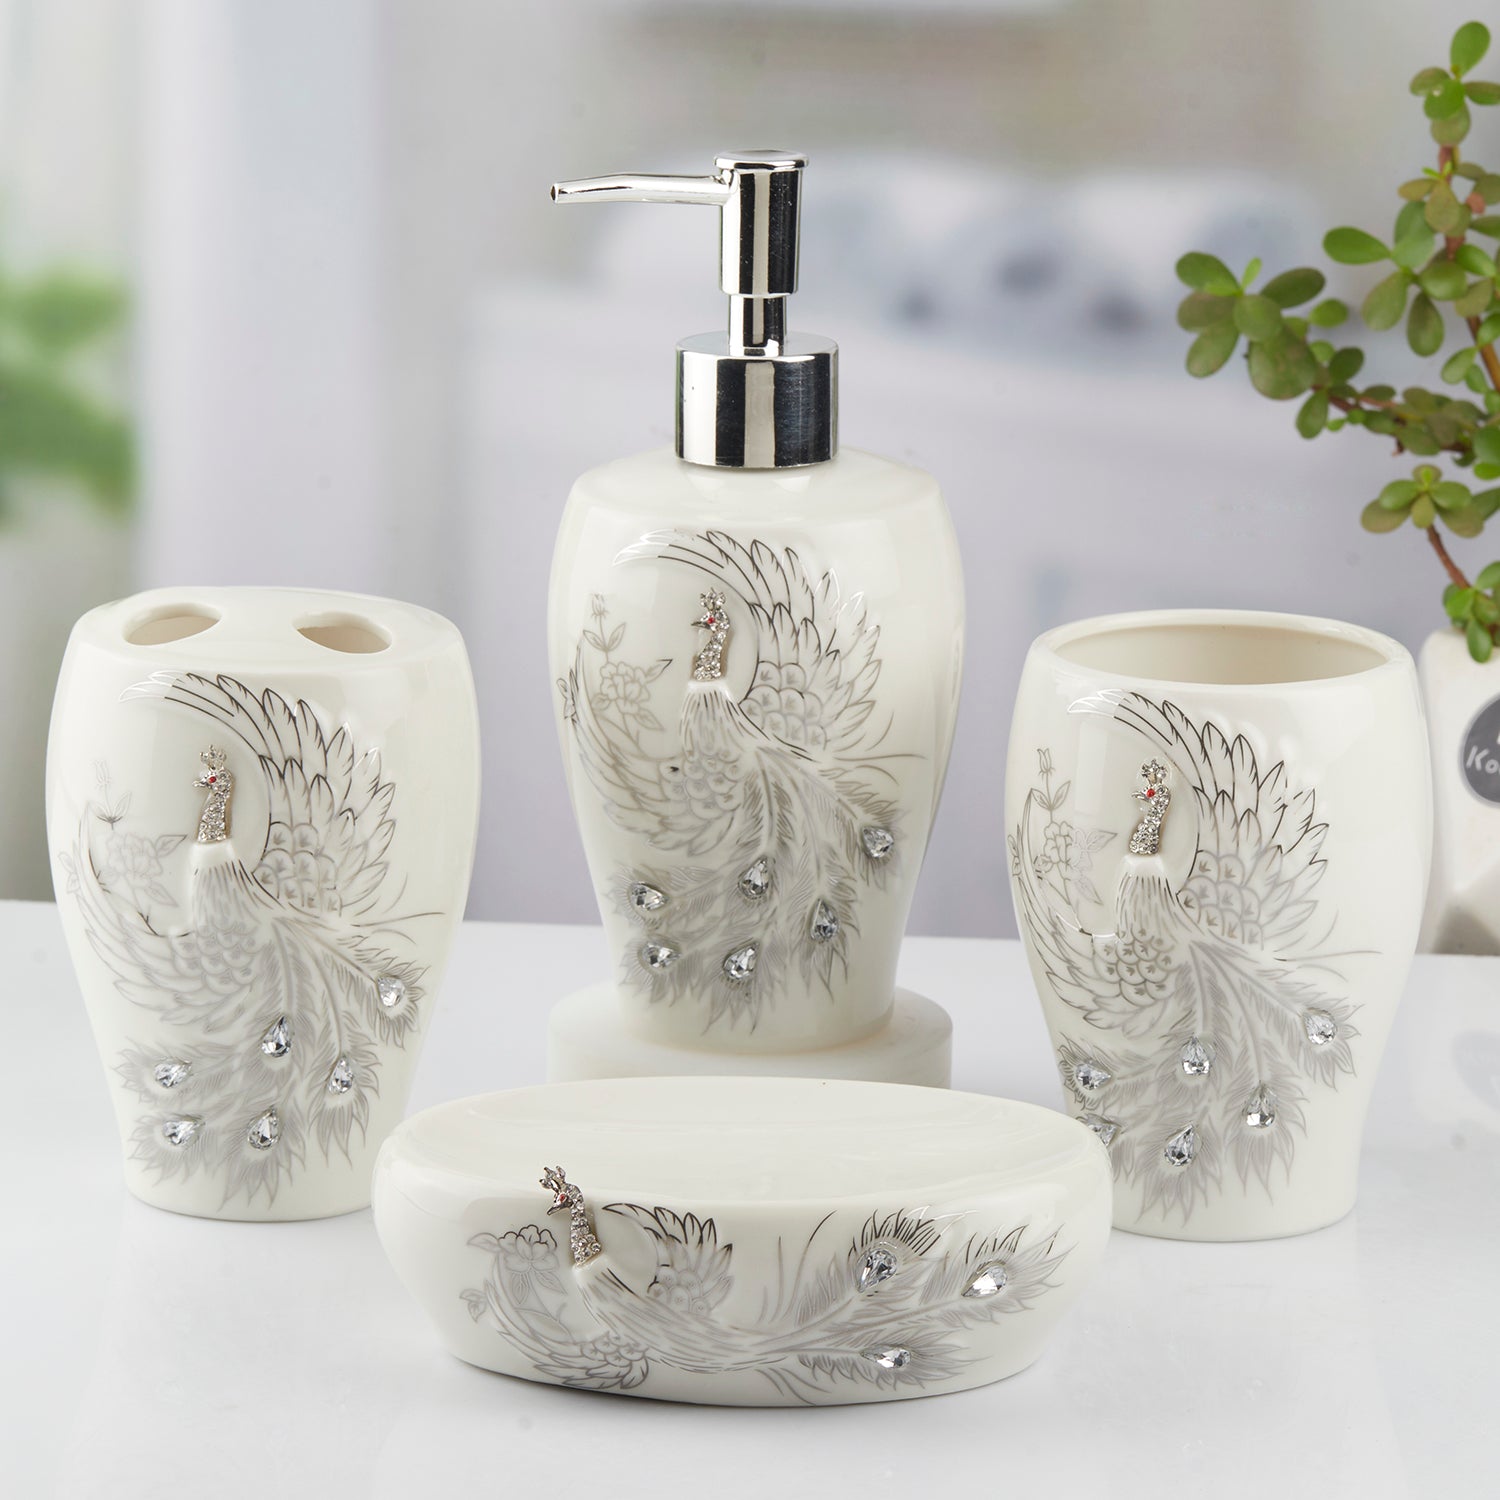 Ceramic Bathroom Accessories Set of 4 Bath Set with Soap Dispenser (10095)